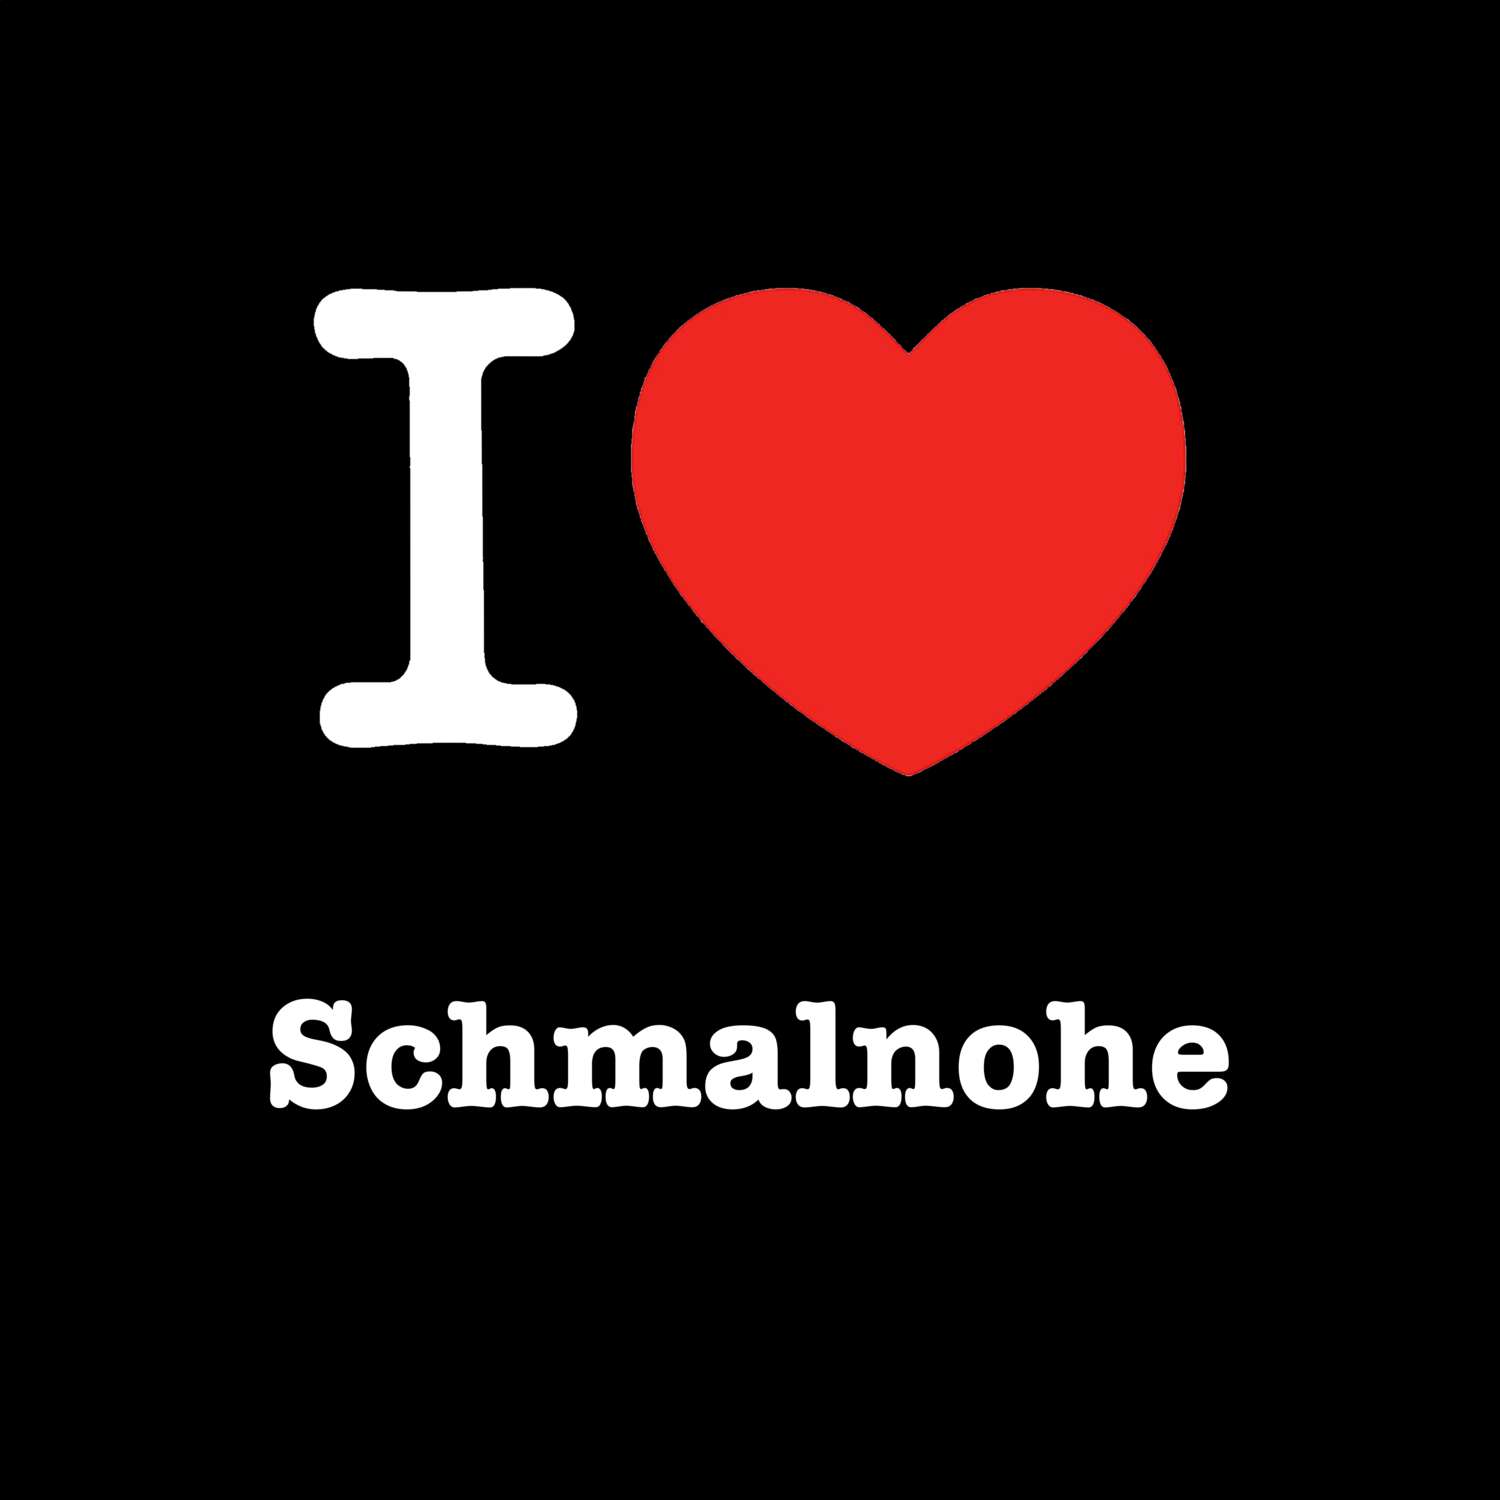 Schmalnohe T-Shirt »I love«